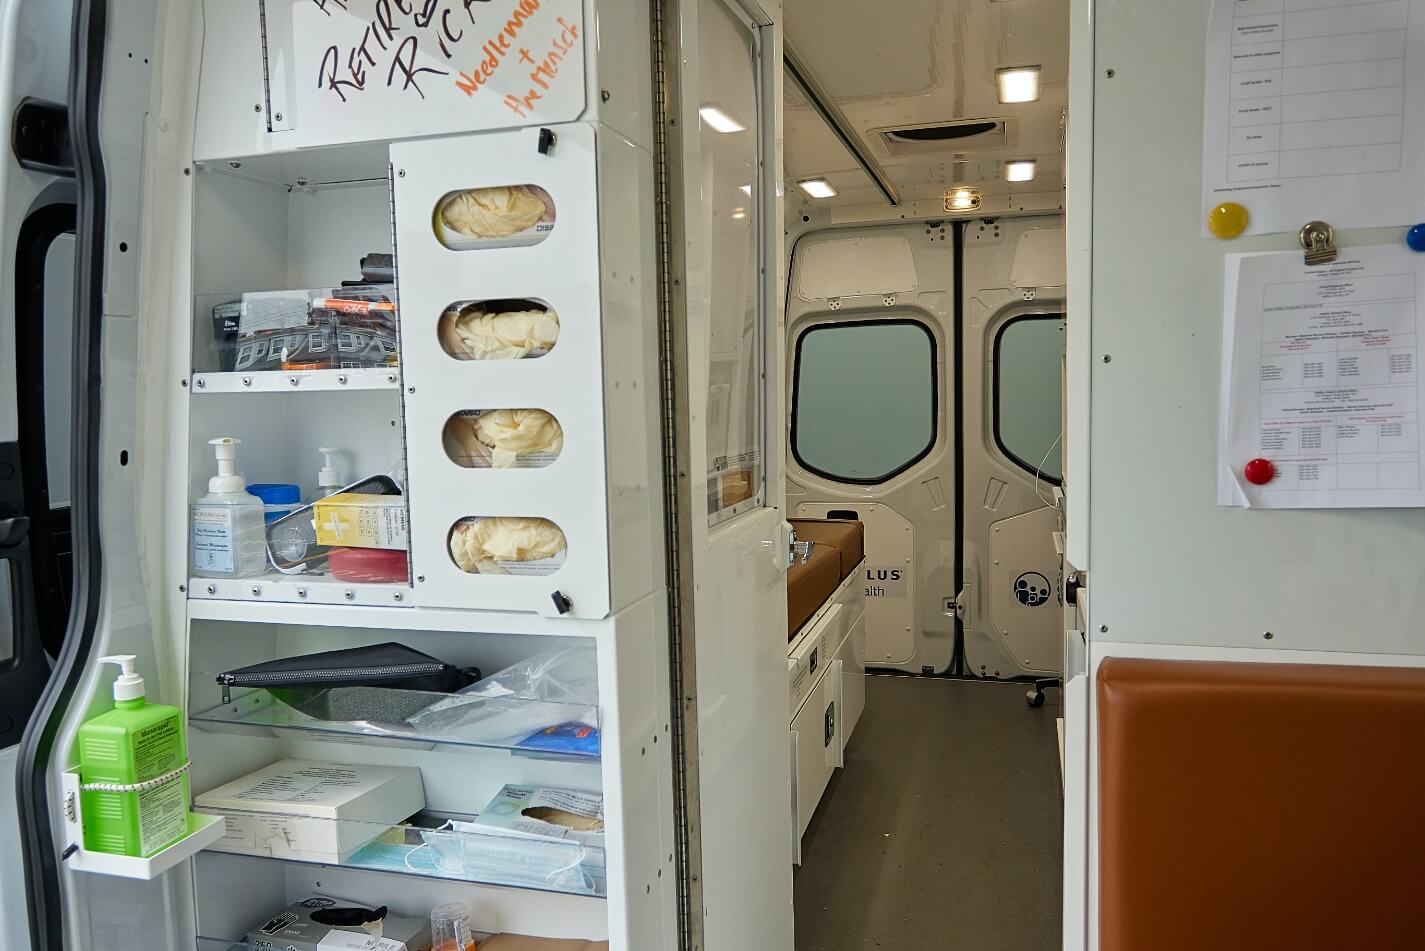 Mobile health van with diagnostic equipment